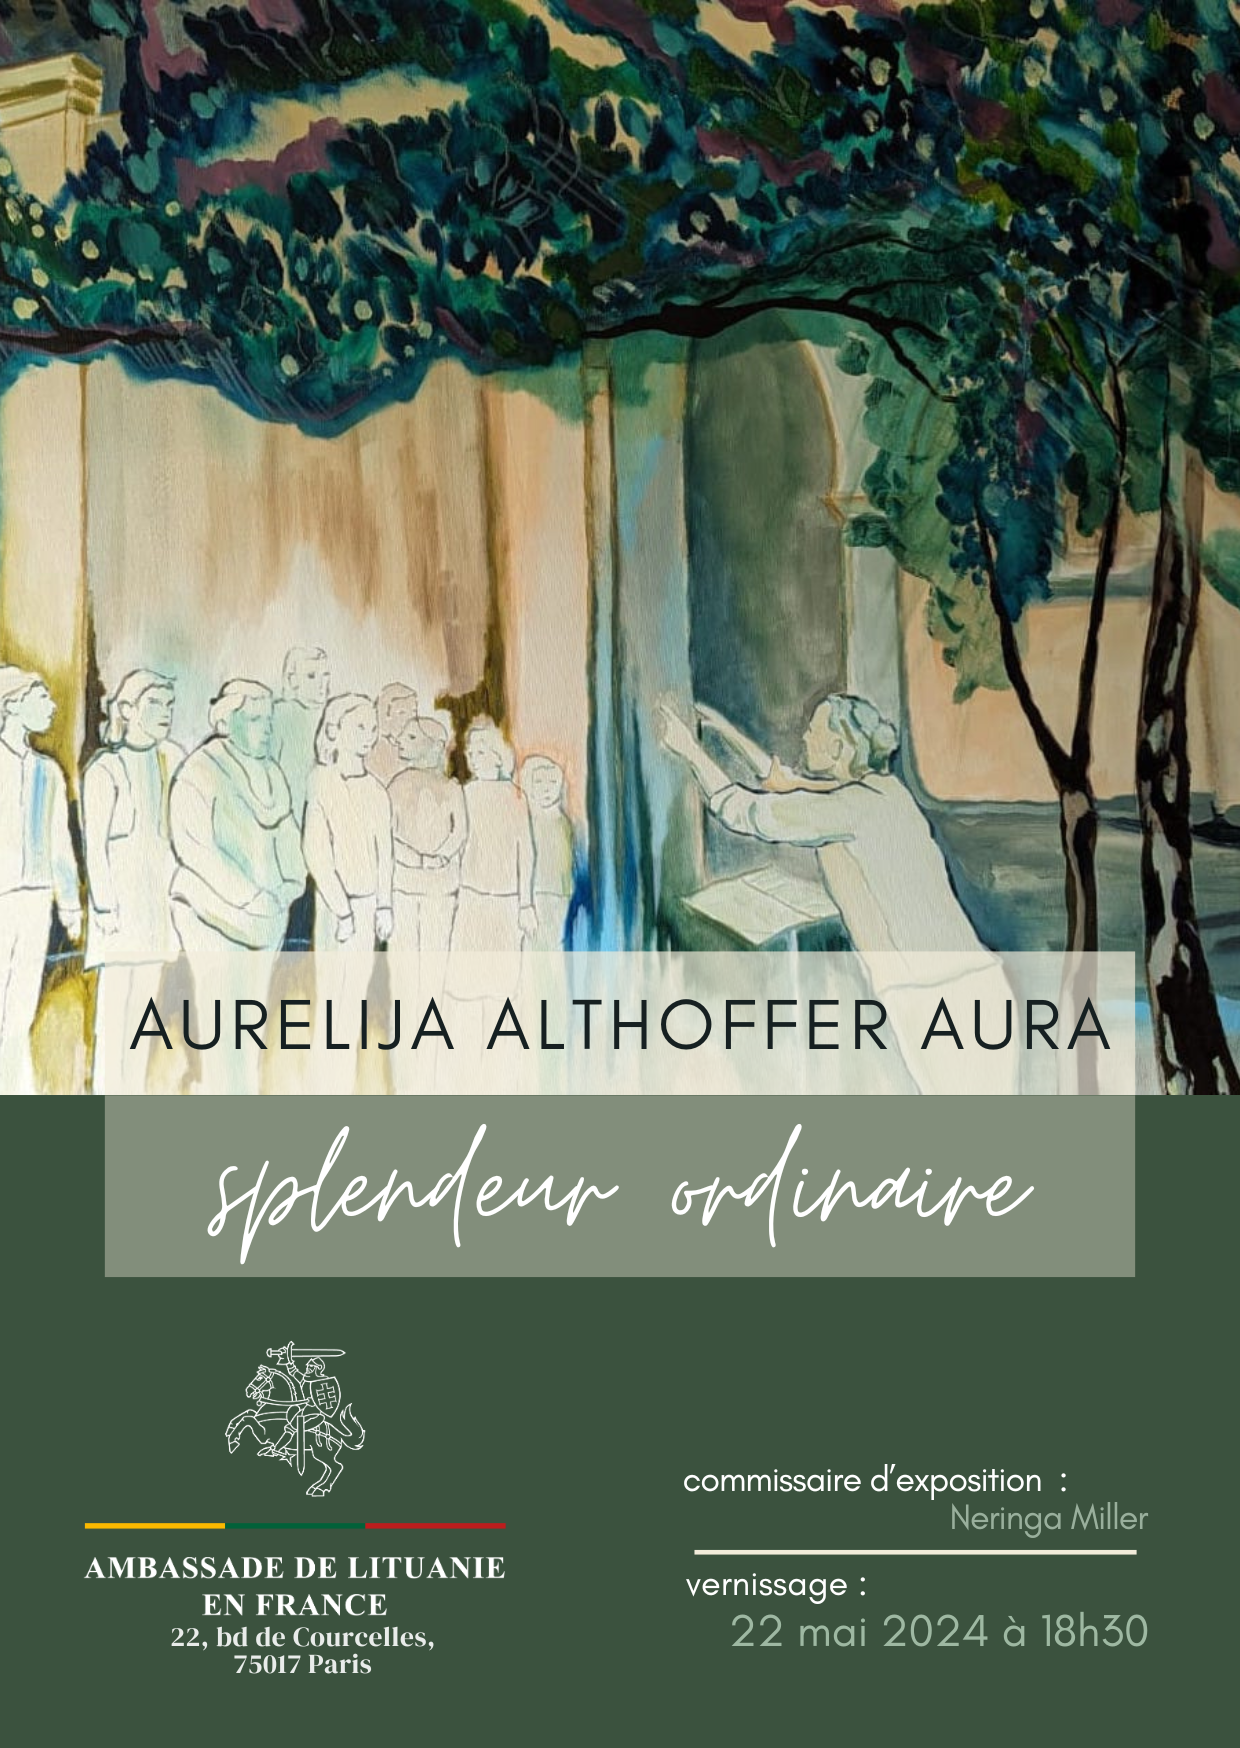 Gegužės 22 d. Aurelijos Althoffer Auros parodos „Splendeur ordinaire“ atidarymas